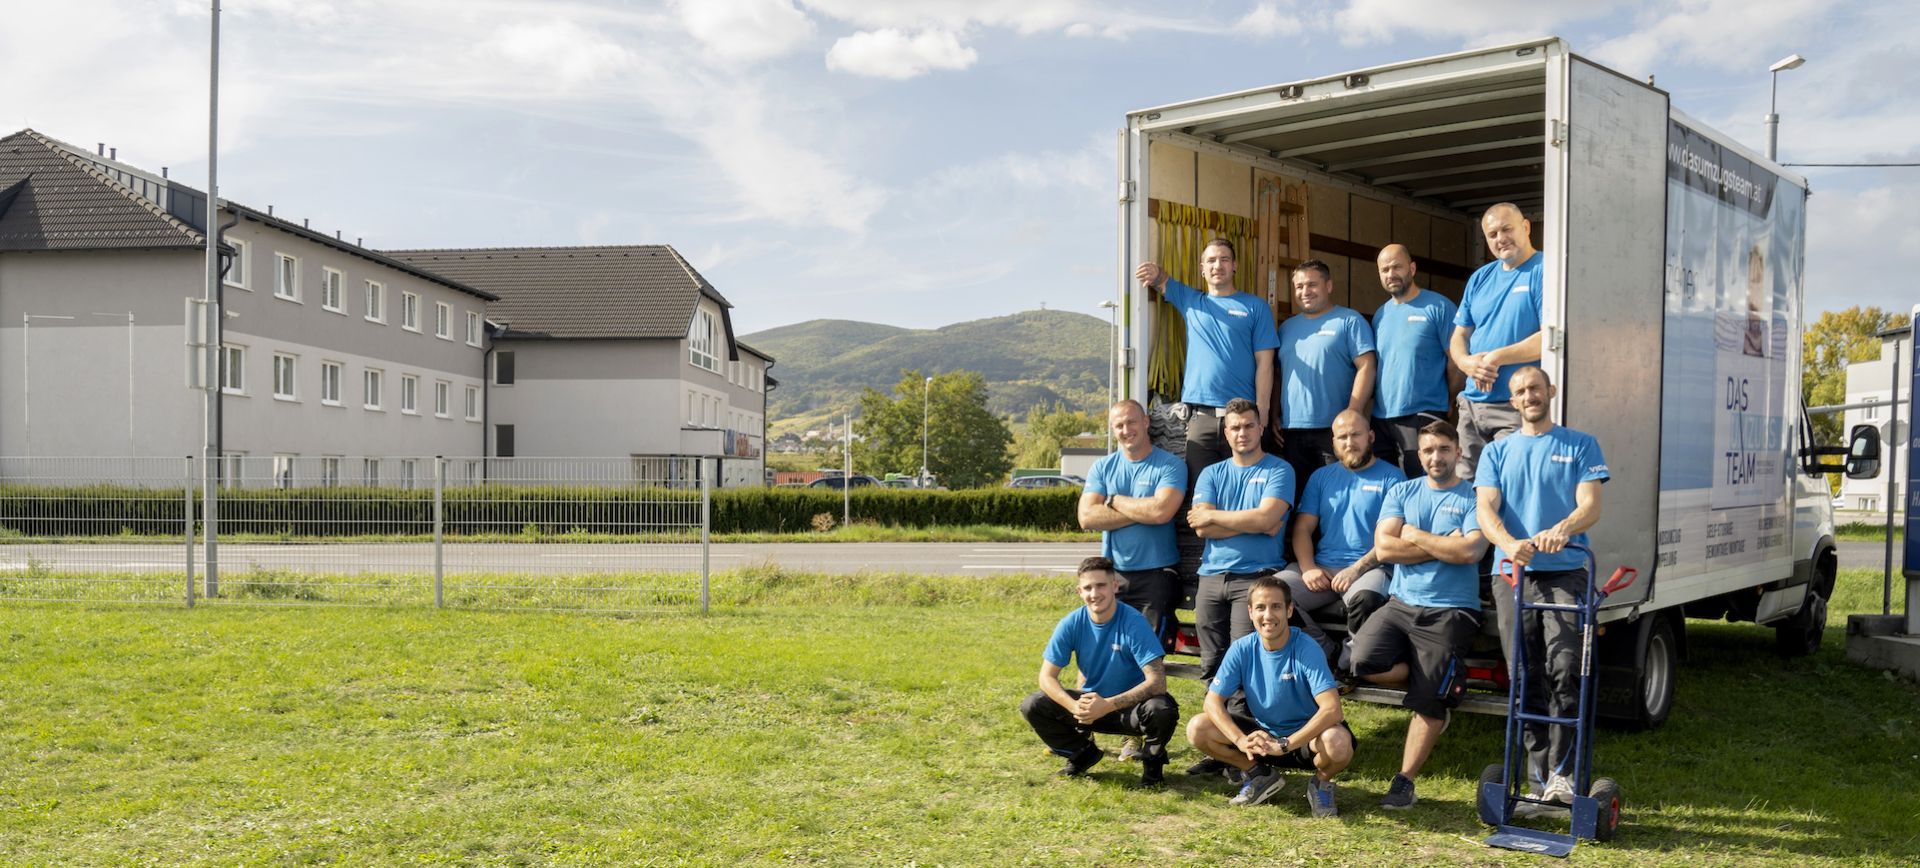 Team picture of DasUmzugsteam in front of a truck